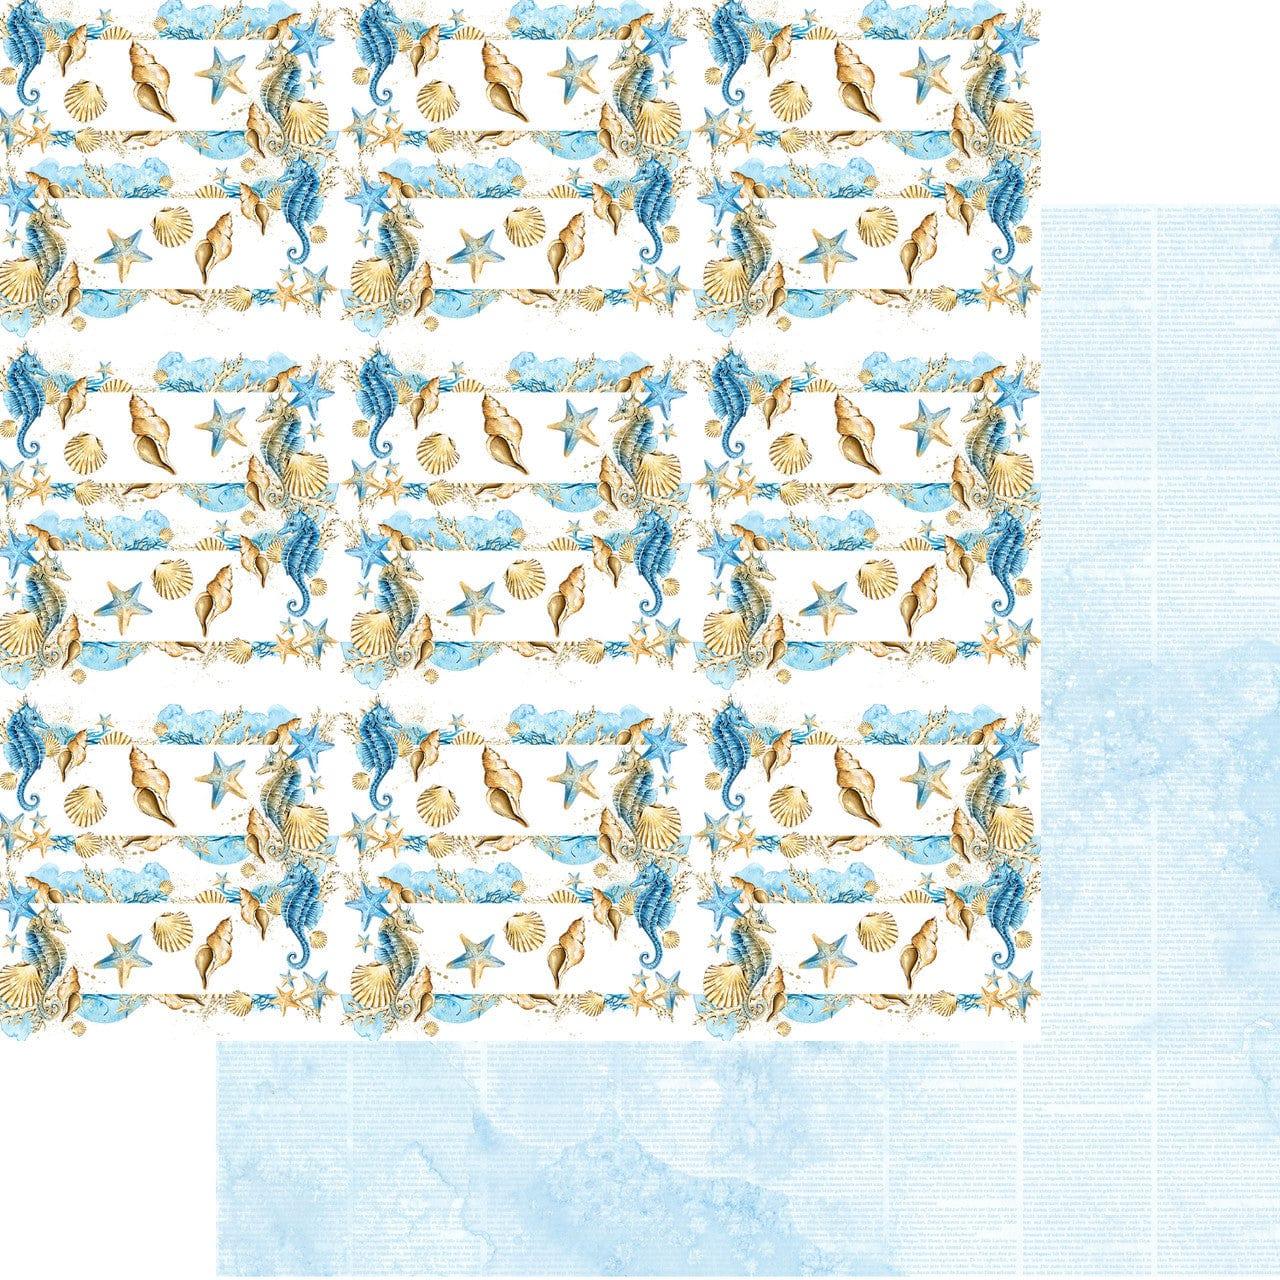 Frou Frou's Sun & Sand 12 x 12 Scrapbook Paper & Embellishment Kit by SSC Designs - Scrapbook Supply Companies